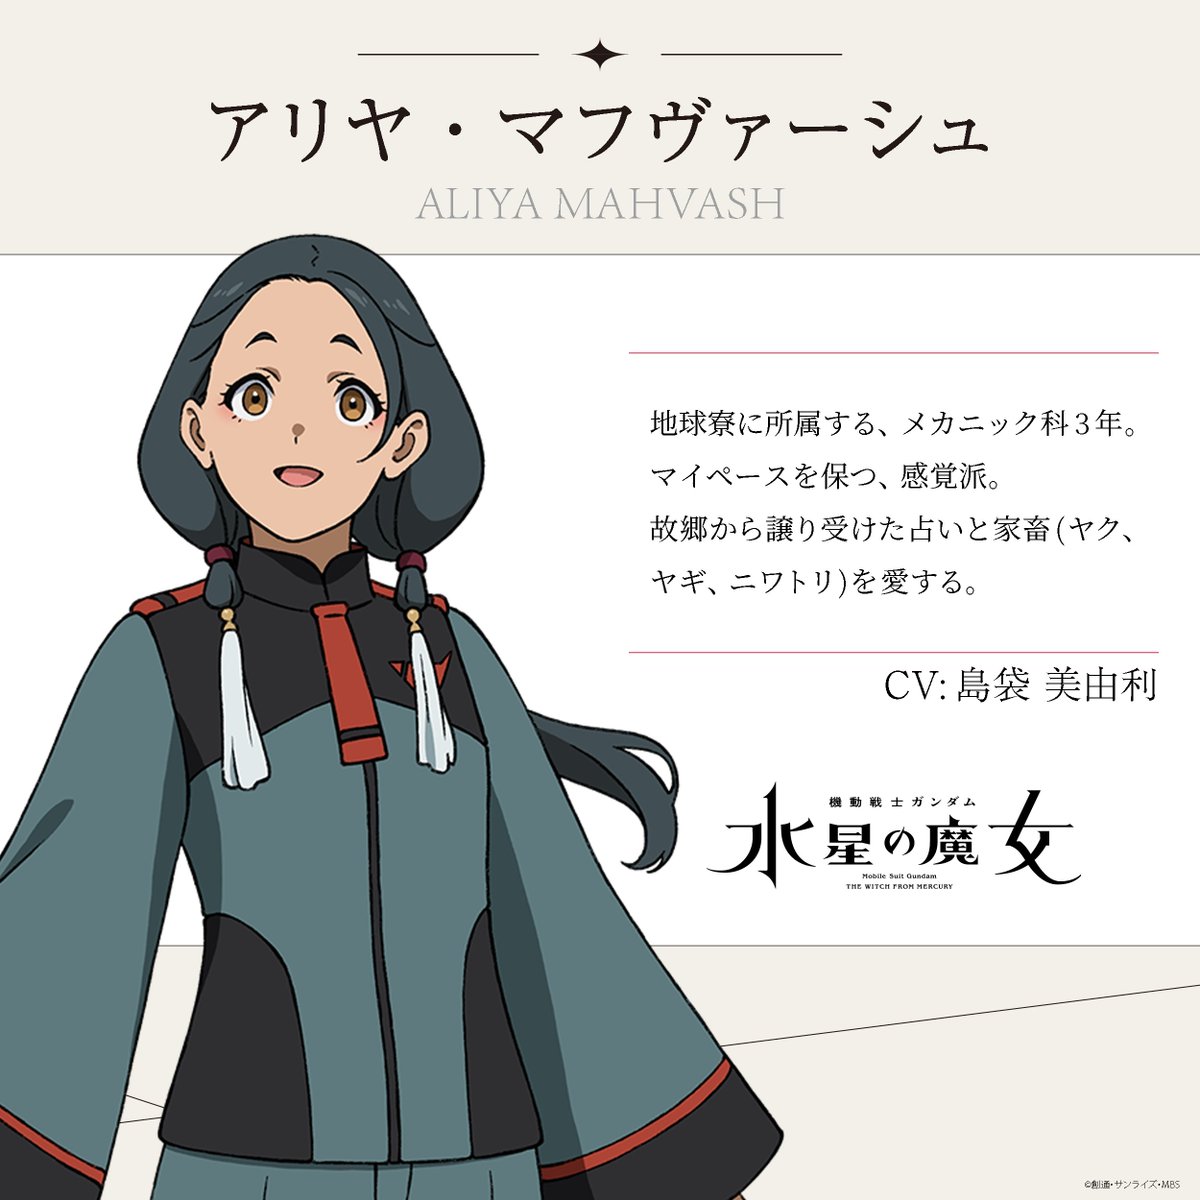 Miyuri Shimabukuro as Aliya Mahvash in Mobile Suit Gundam: The Witch from Mercury